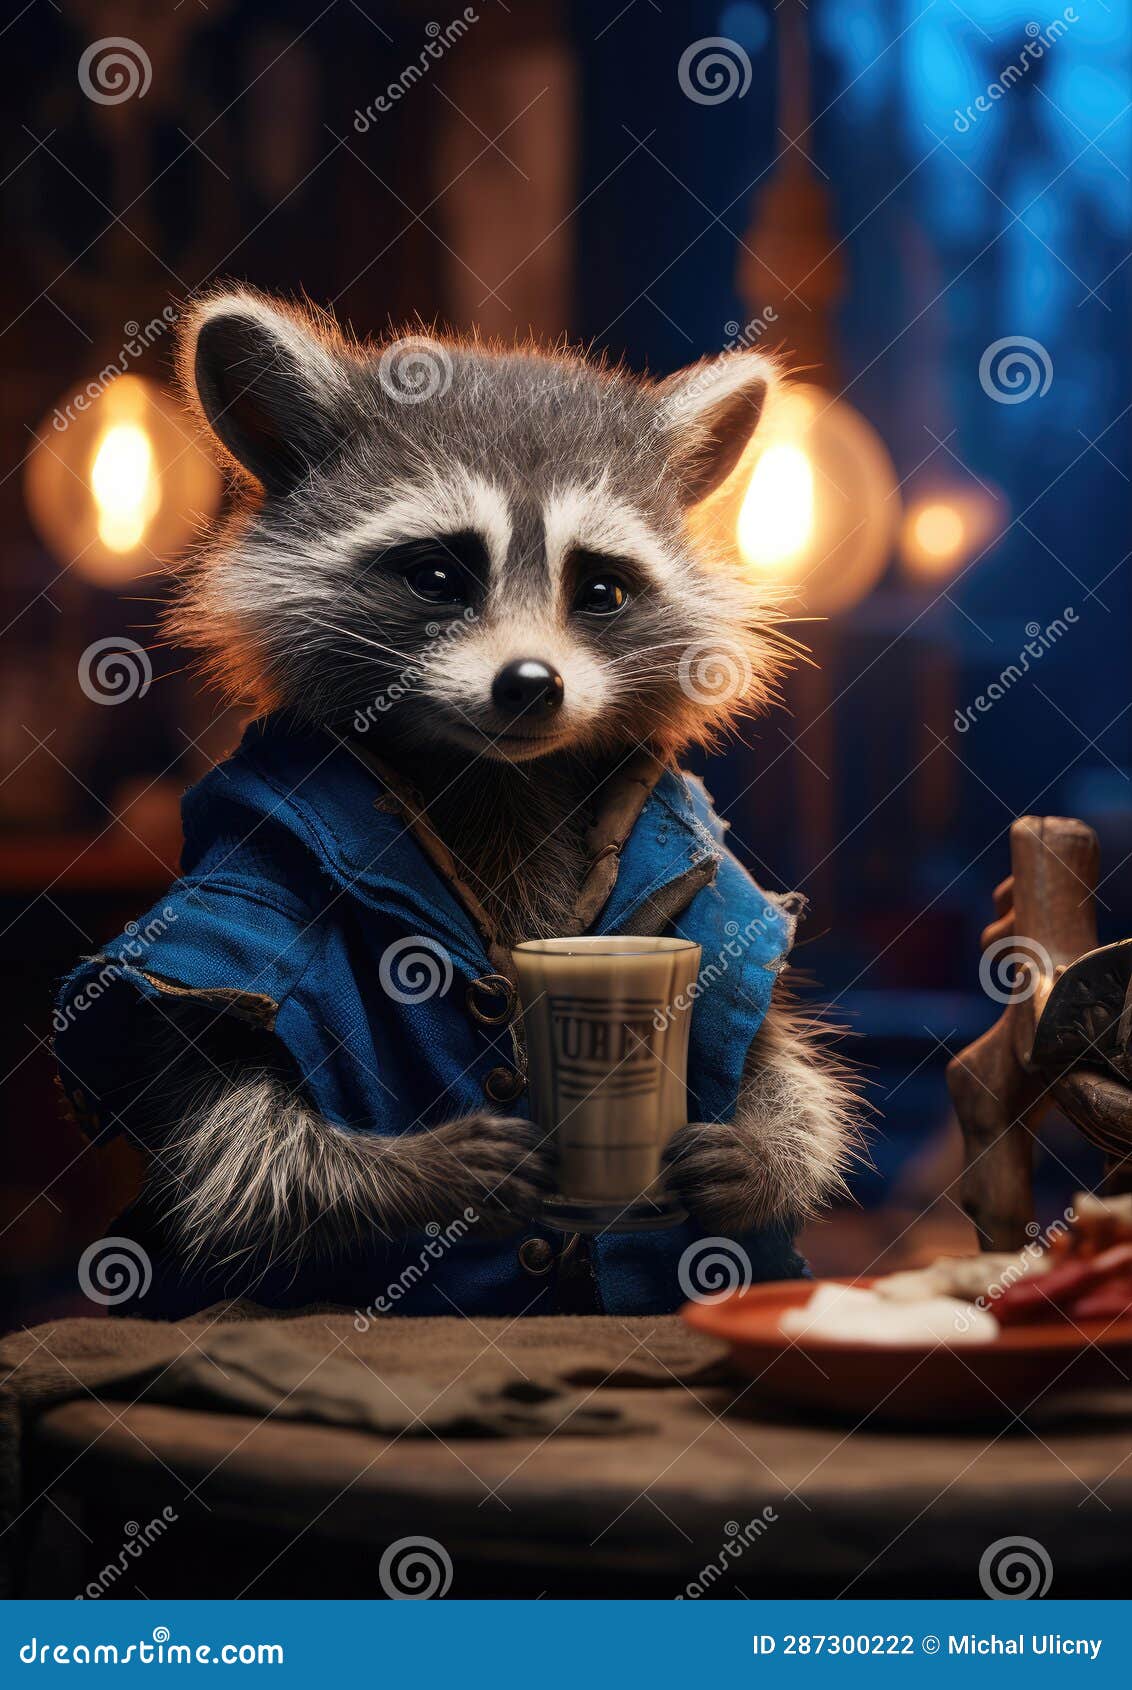 cute raccon in blue coat drinking coffee